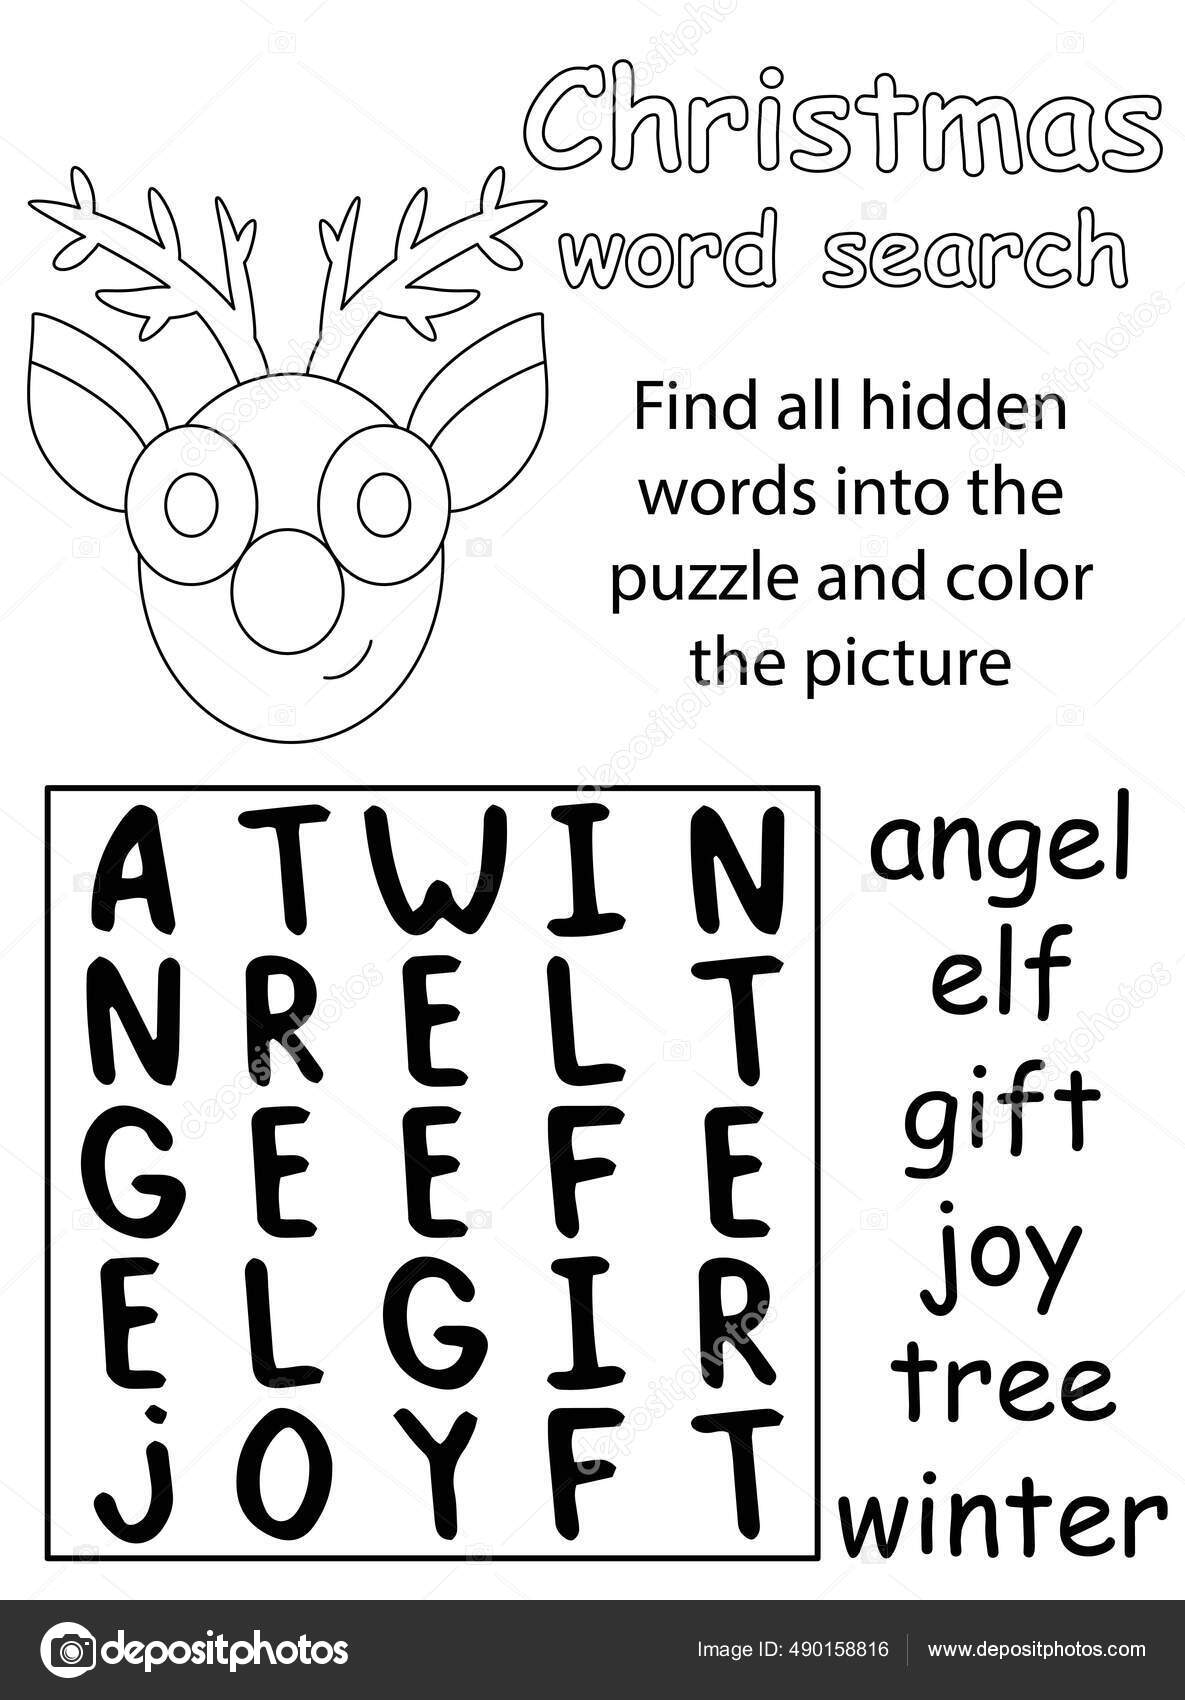 https://st2.depositphotos.com/38732800/49015/v/1600/depositphotos_490158816-stock-illustration-christmas-word-search-puzzle-kids.jpg